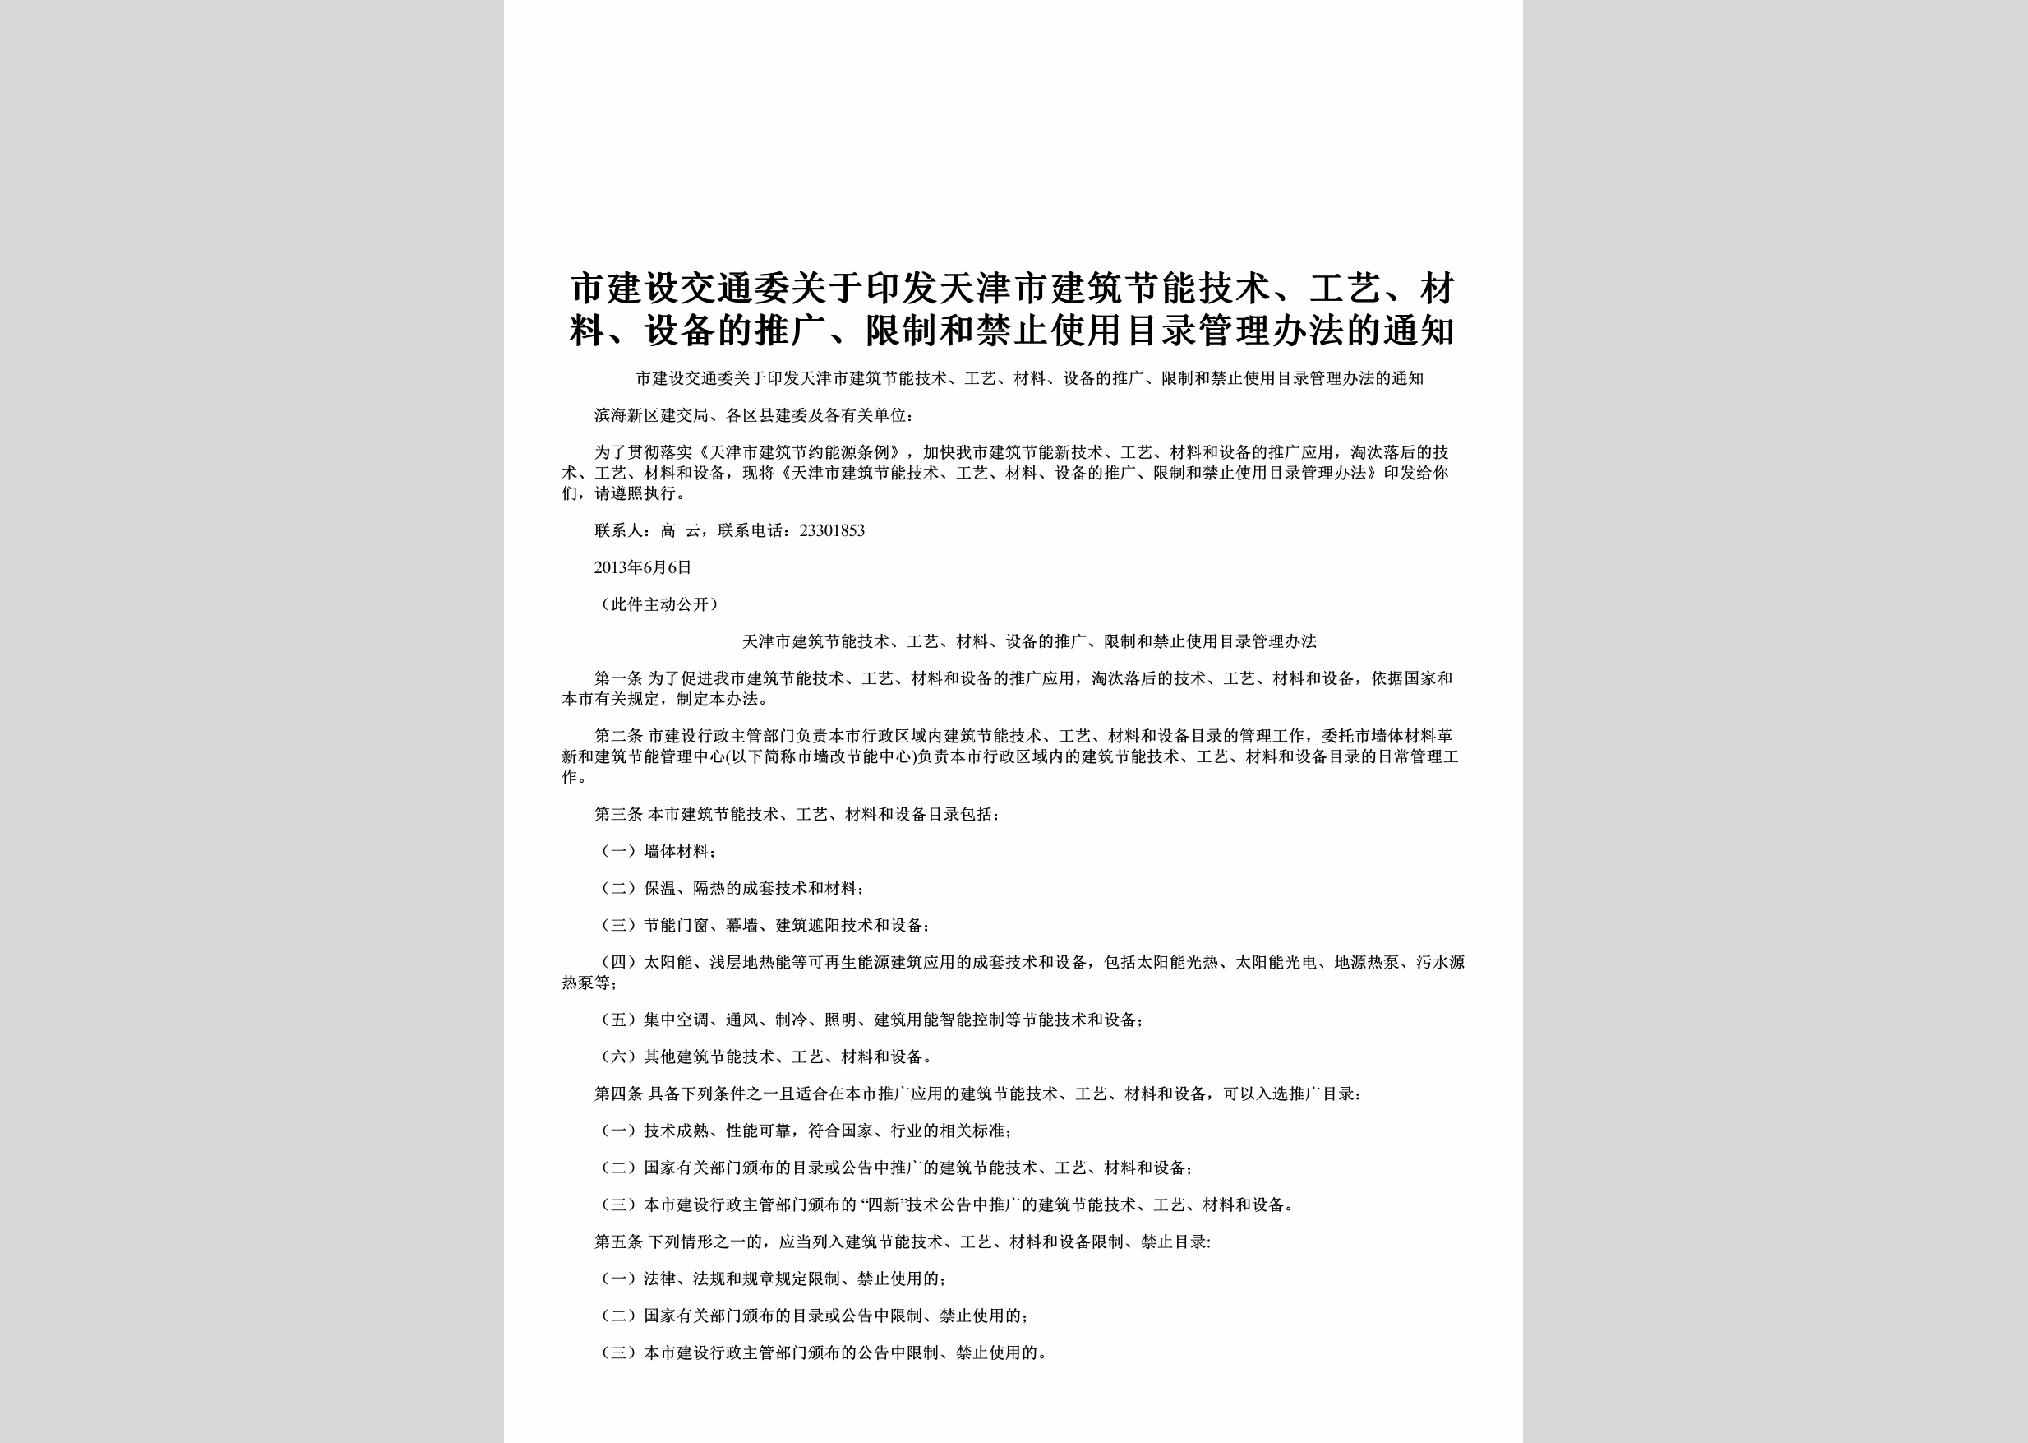 TJ-XZHJZSY-2013：关于印发天津市建筑节能技术、工艺、材料、设备的推广、限制和禁止使用目录管理办法的通知